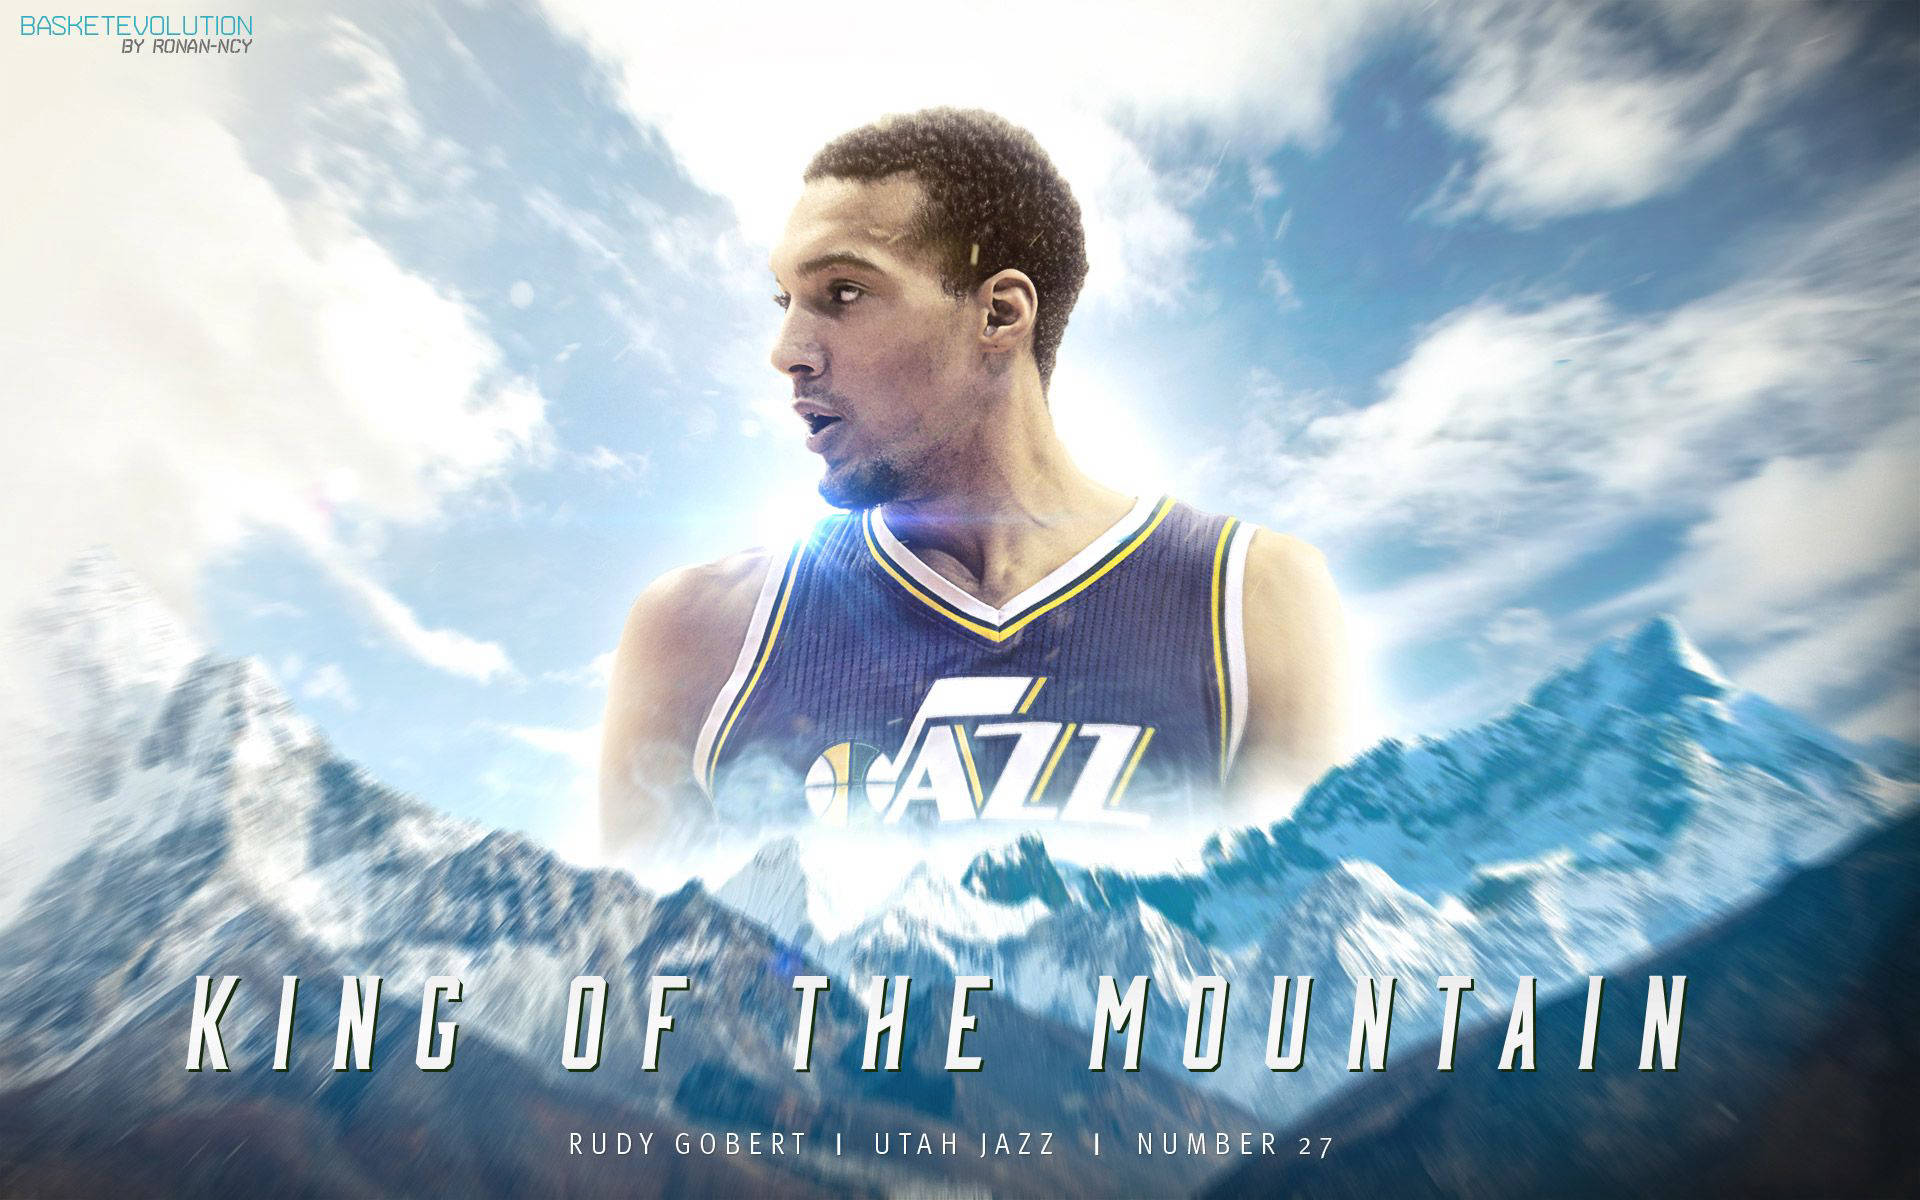 Utah Jazz Rudy Gobert Digital Poster Background